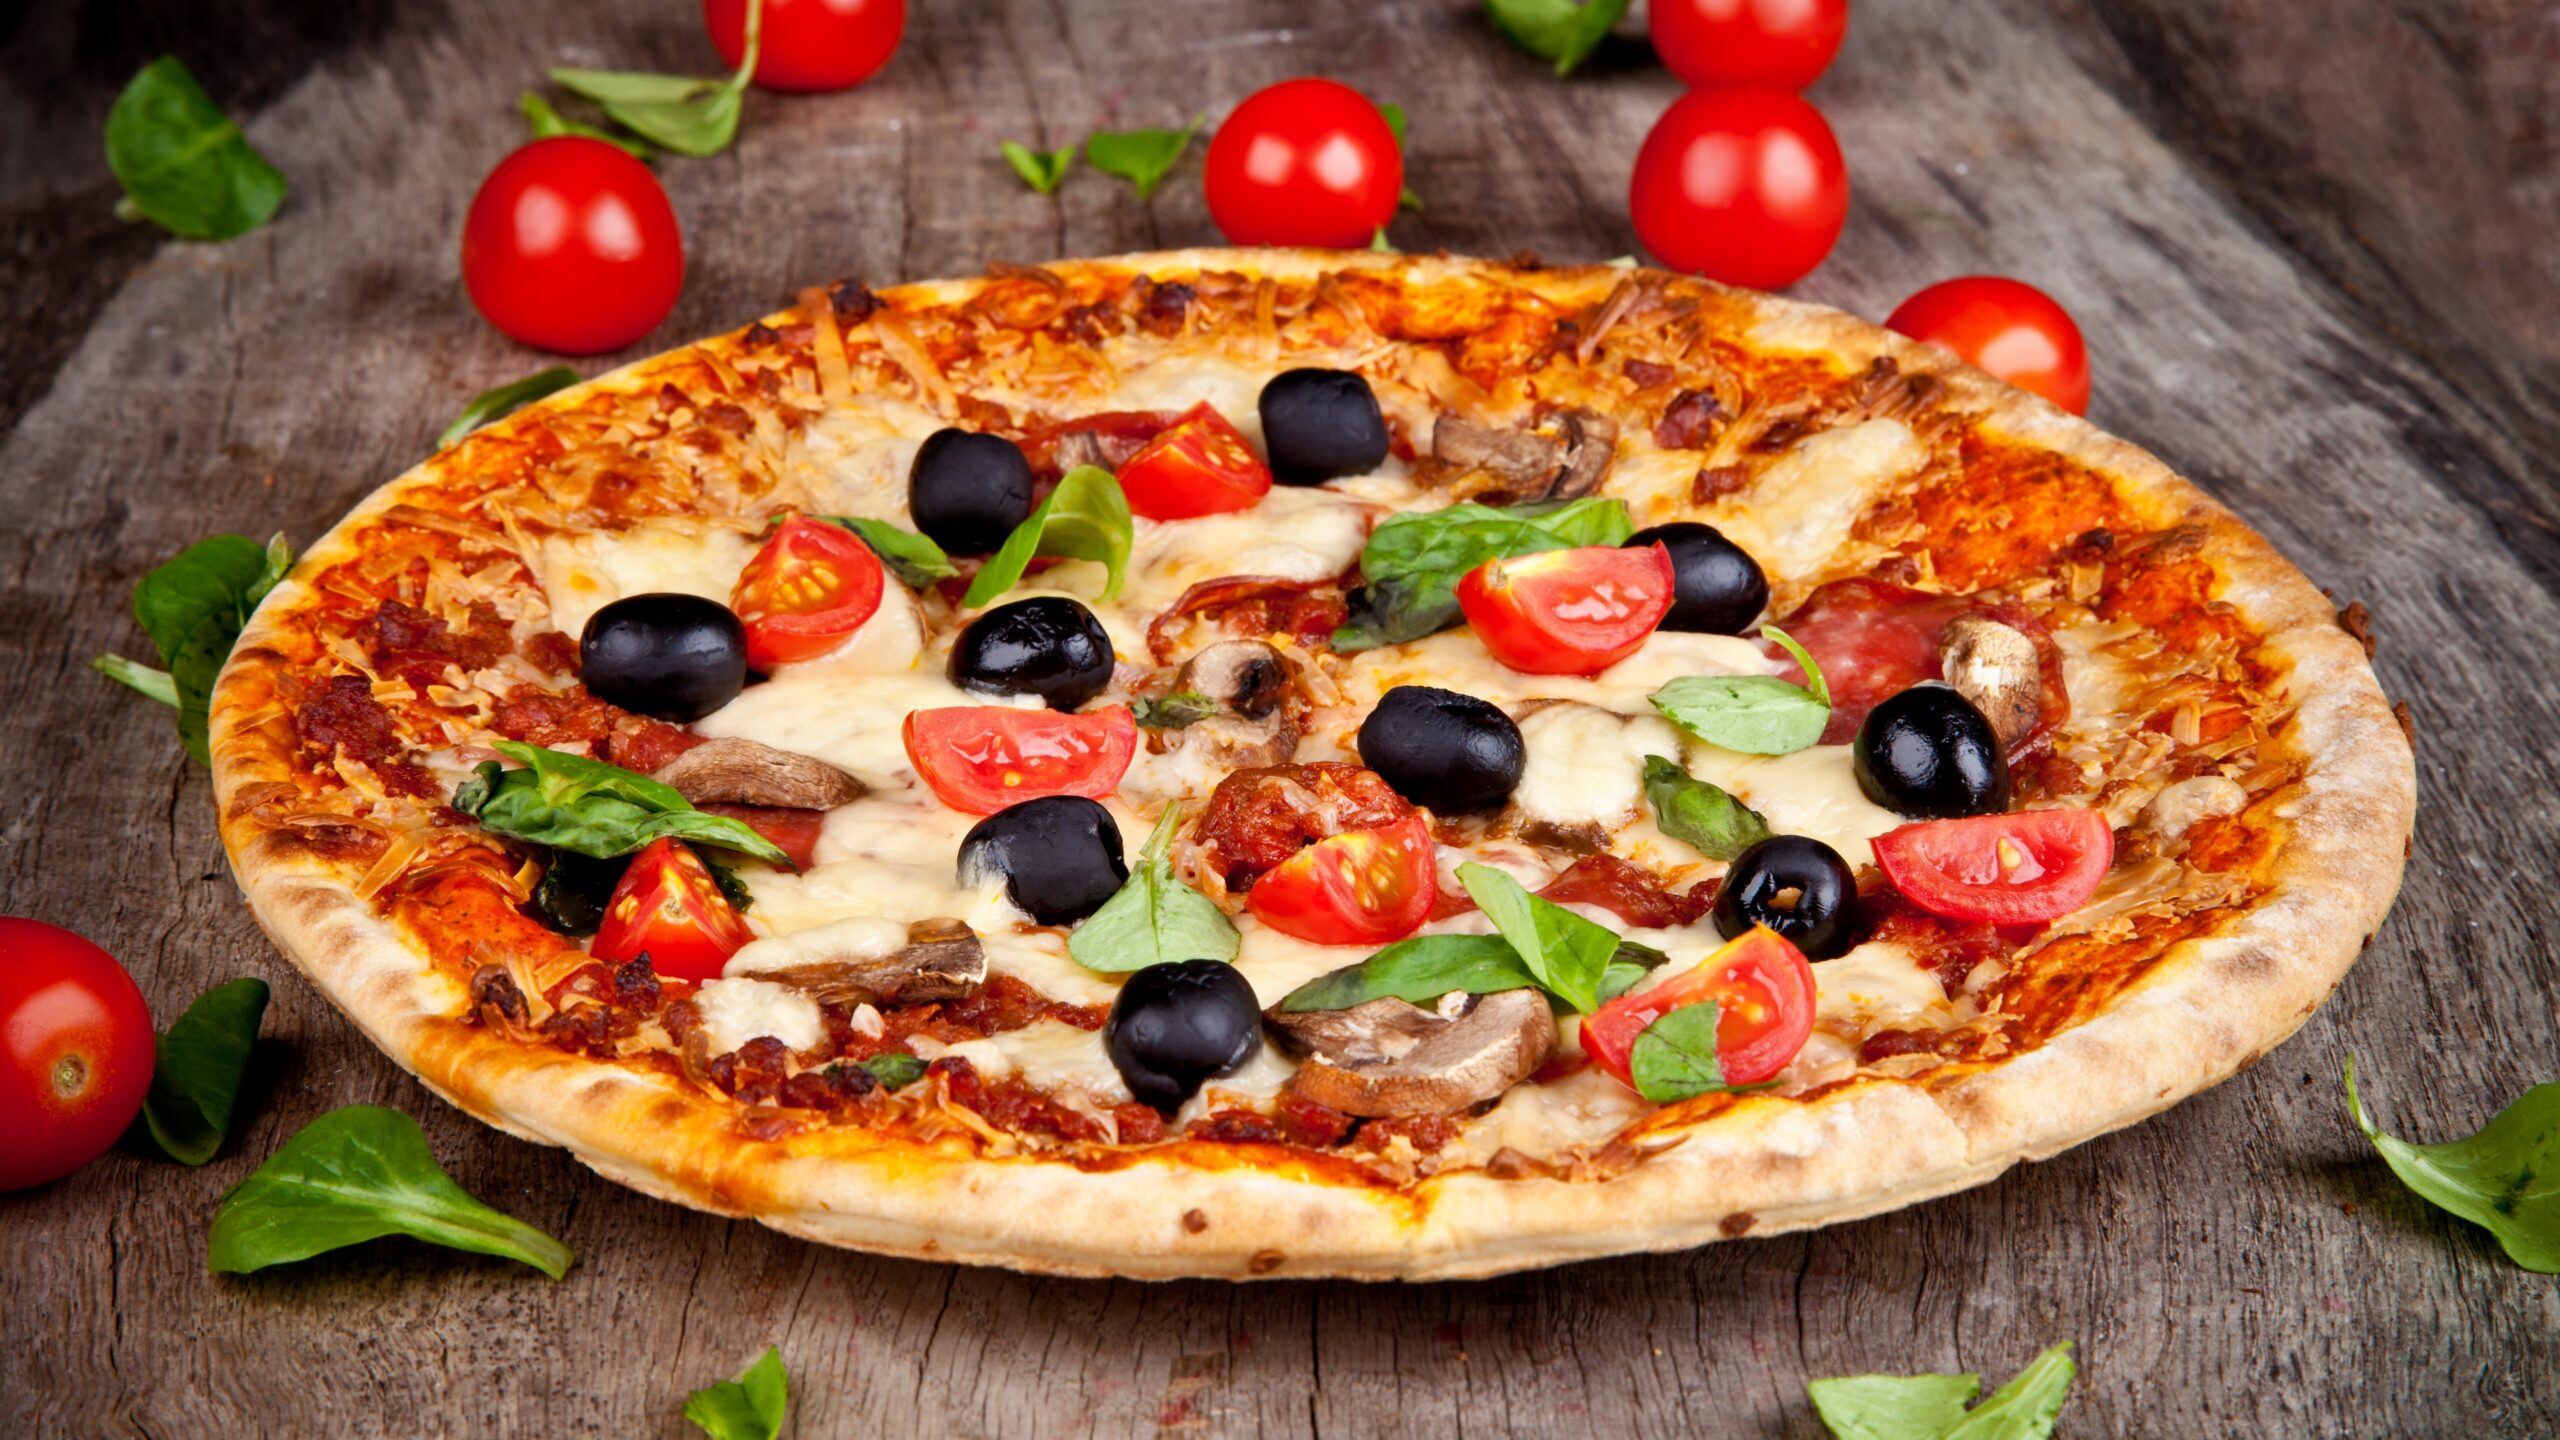 pizza_tomatoes_olives_mushrooms_cheese_dish_leaves_food